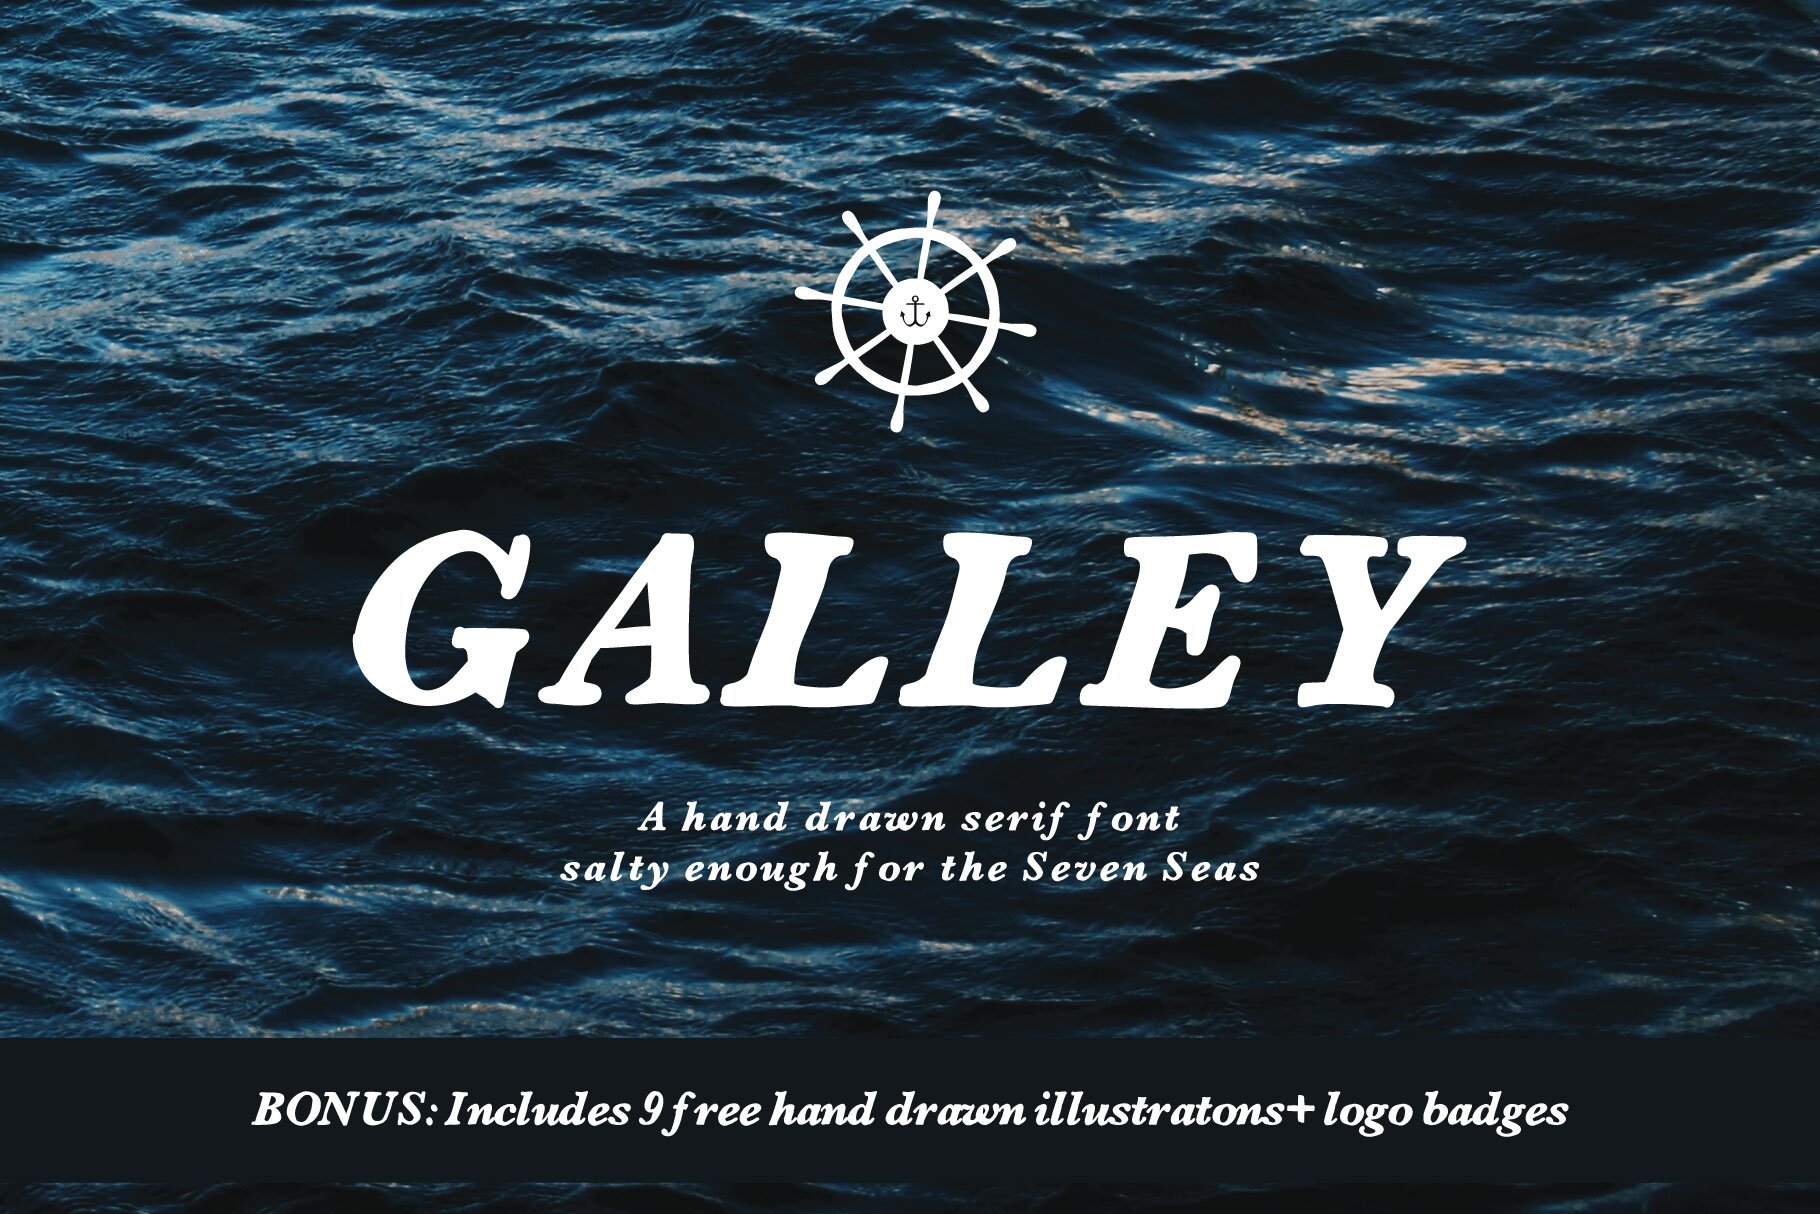 Galley Font + Logo Badges cover image.